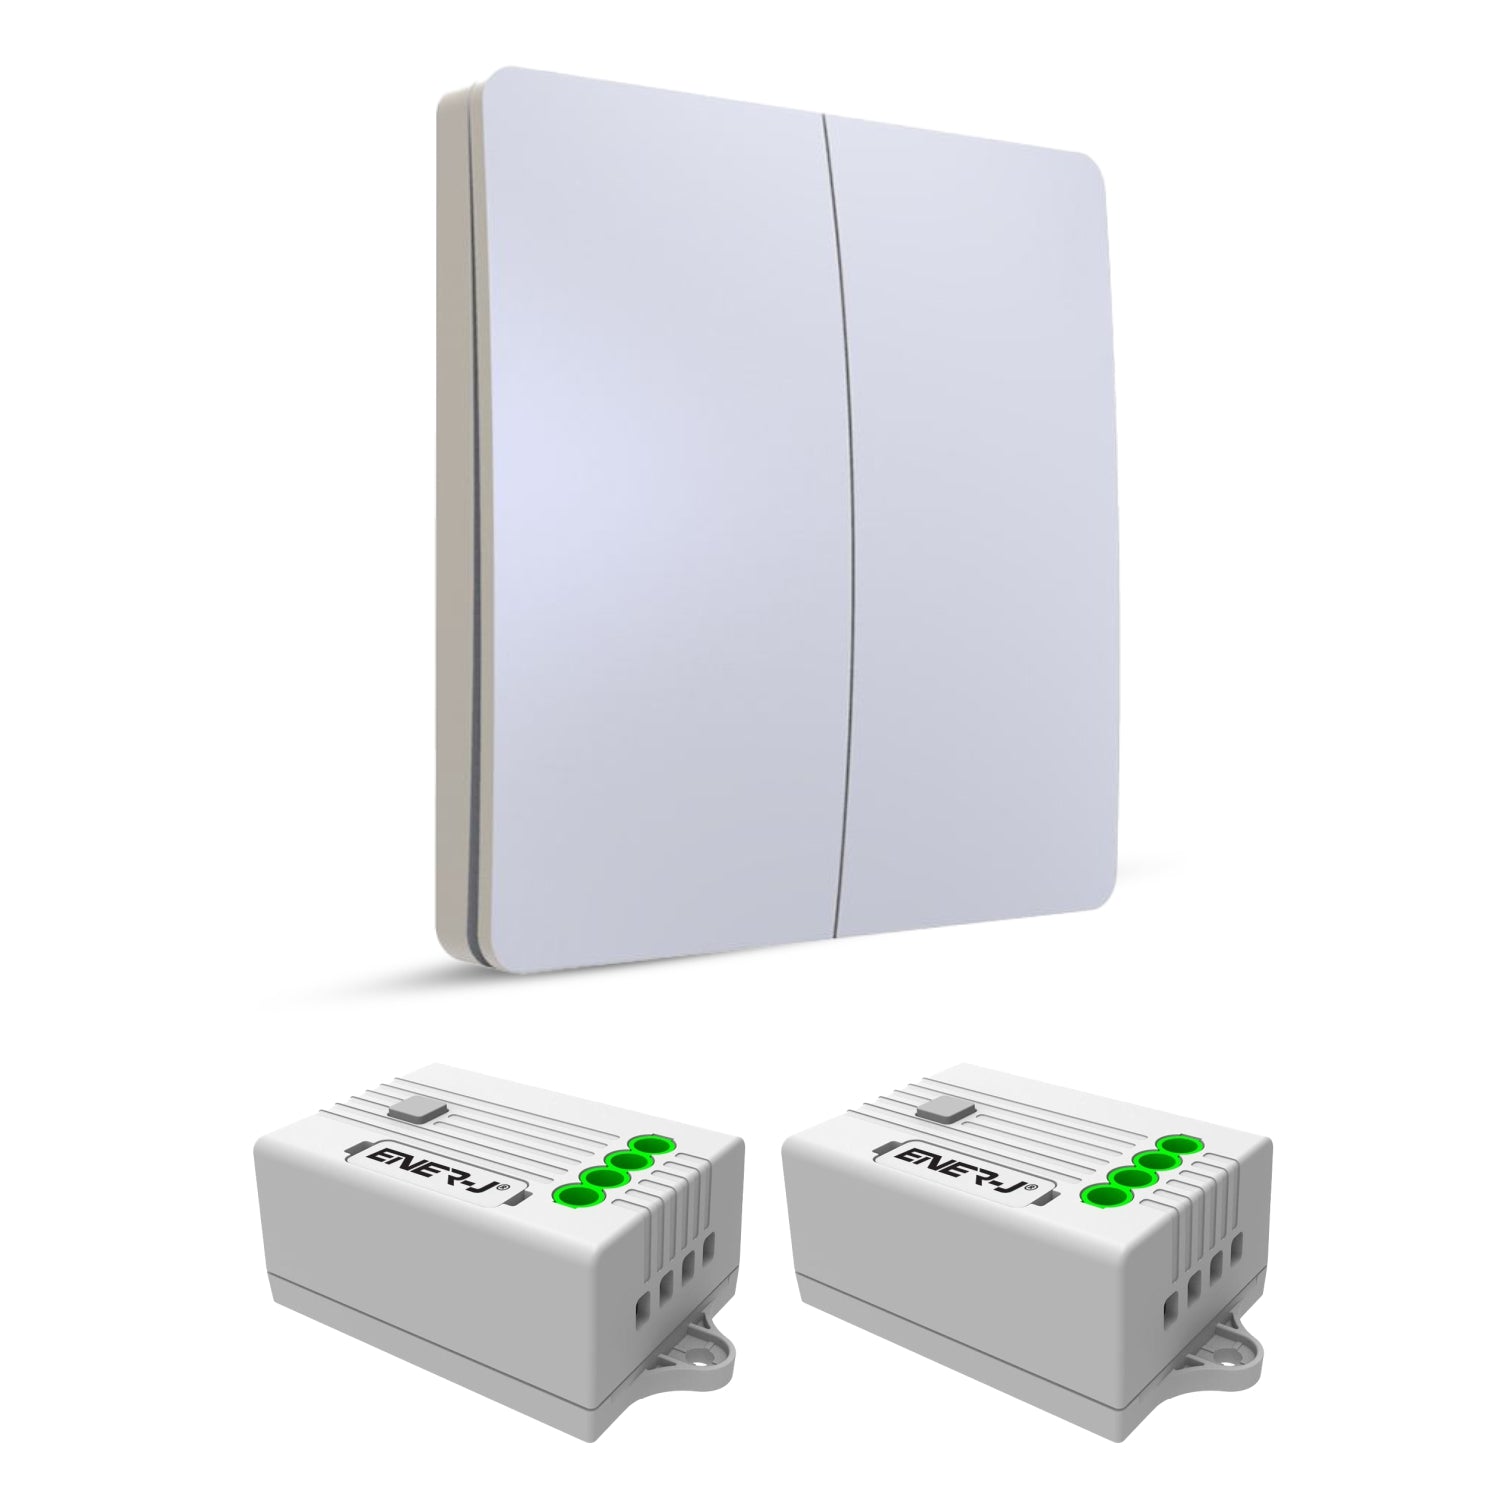 ENER-J 2 Gang Wireless Kinetic Switch (white body) + 2 x 500W RF Receiver